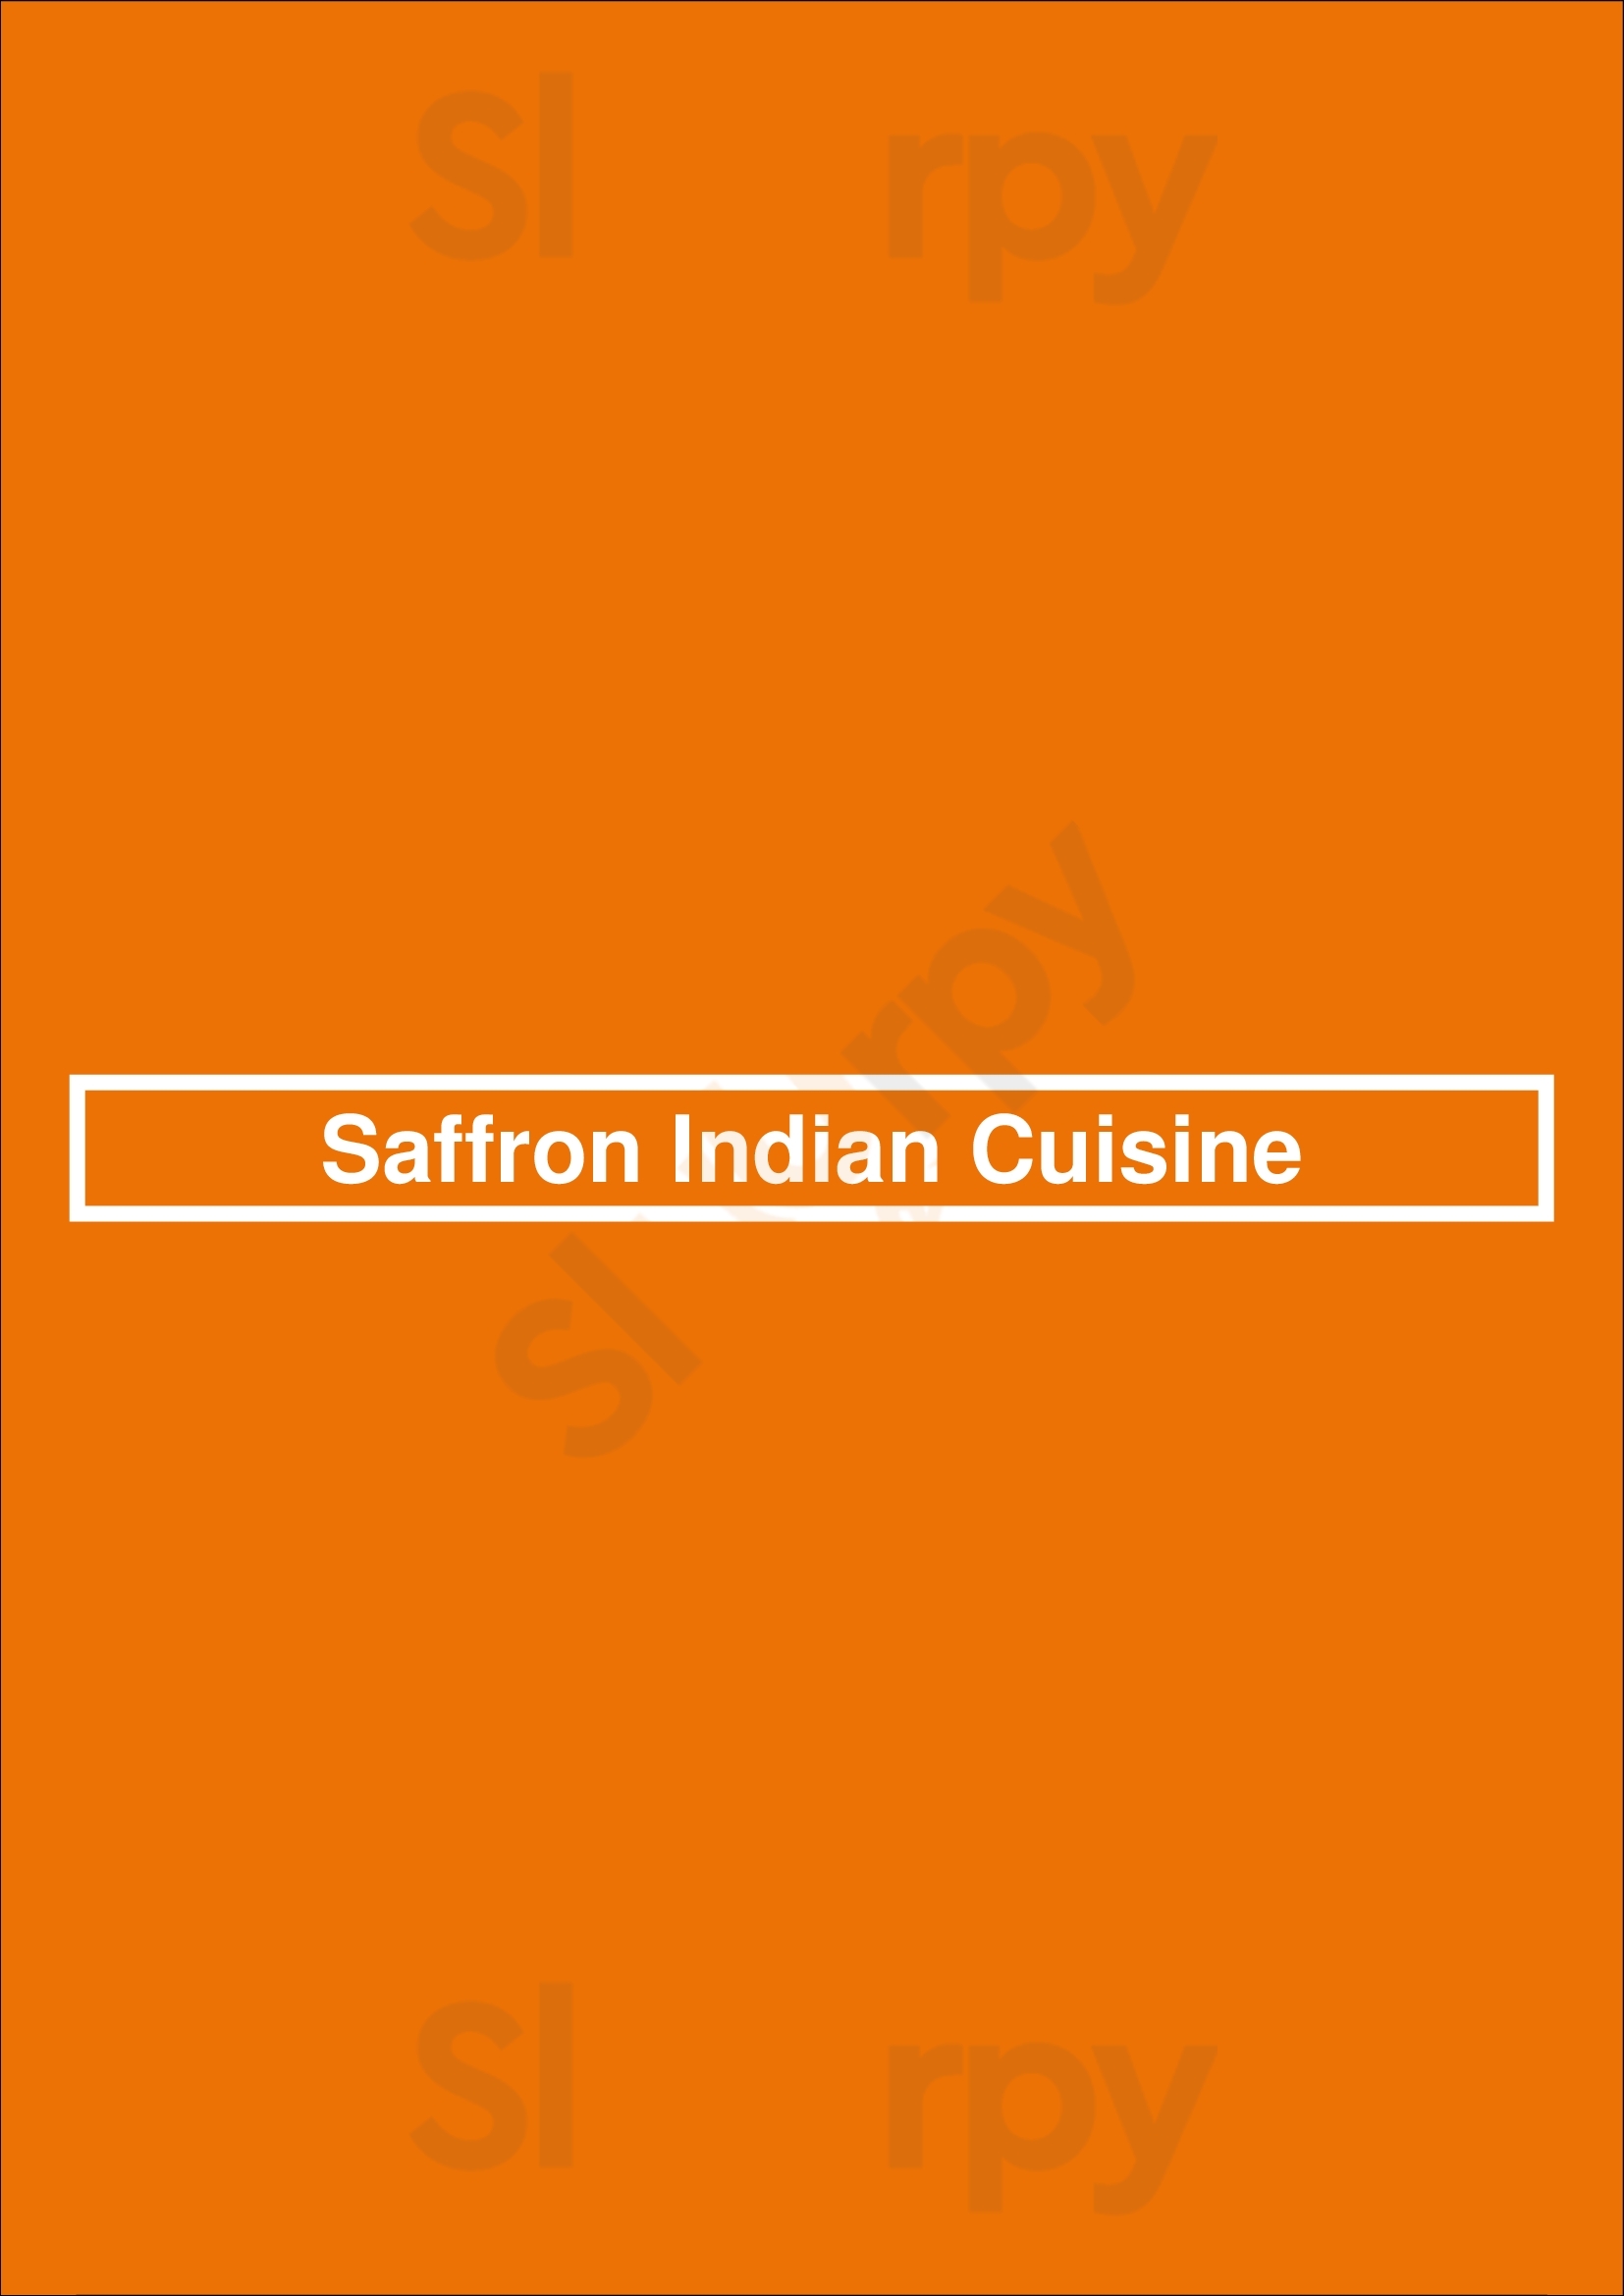 Saffron Indian Cuisine Rockville Menu - 1